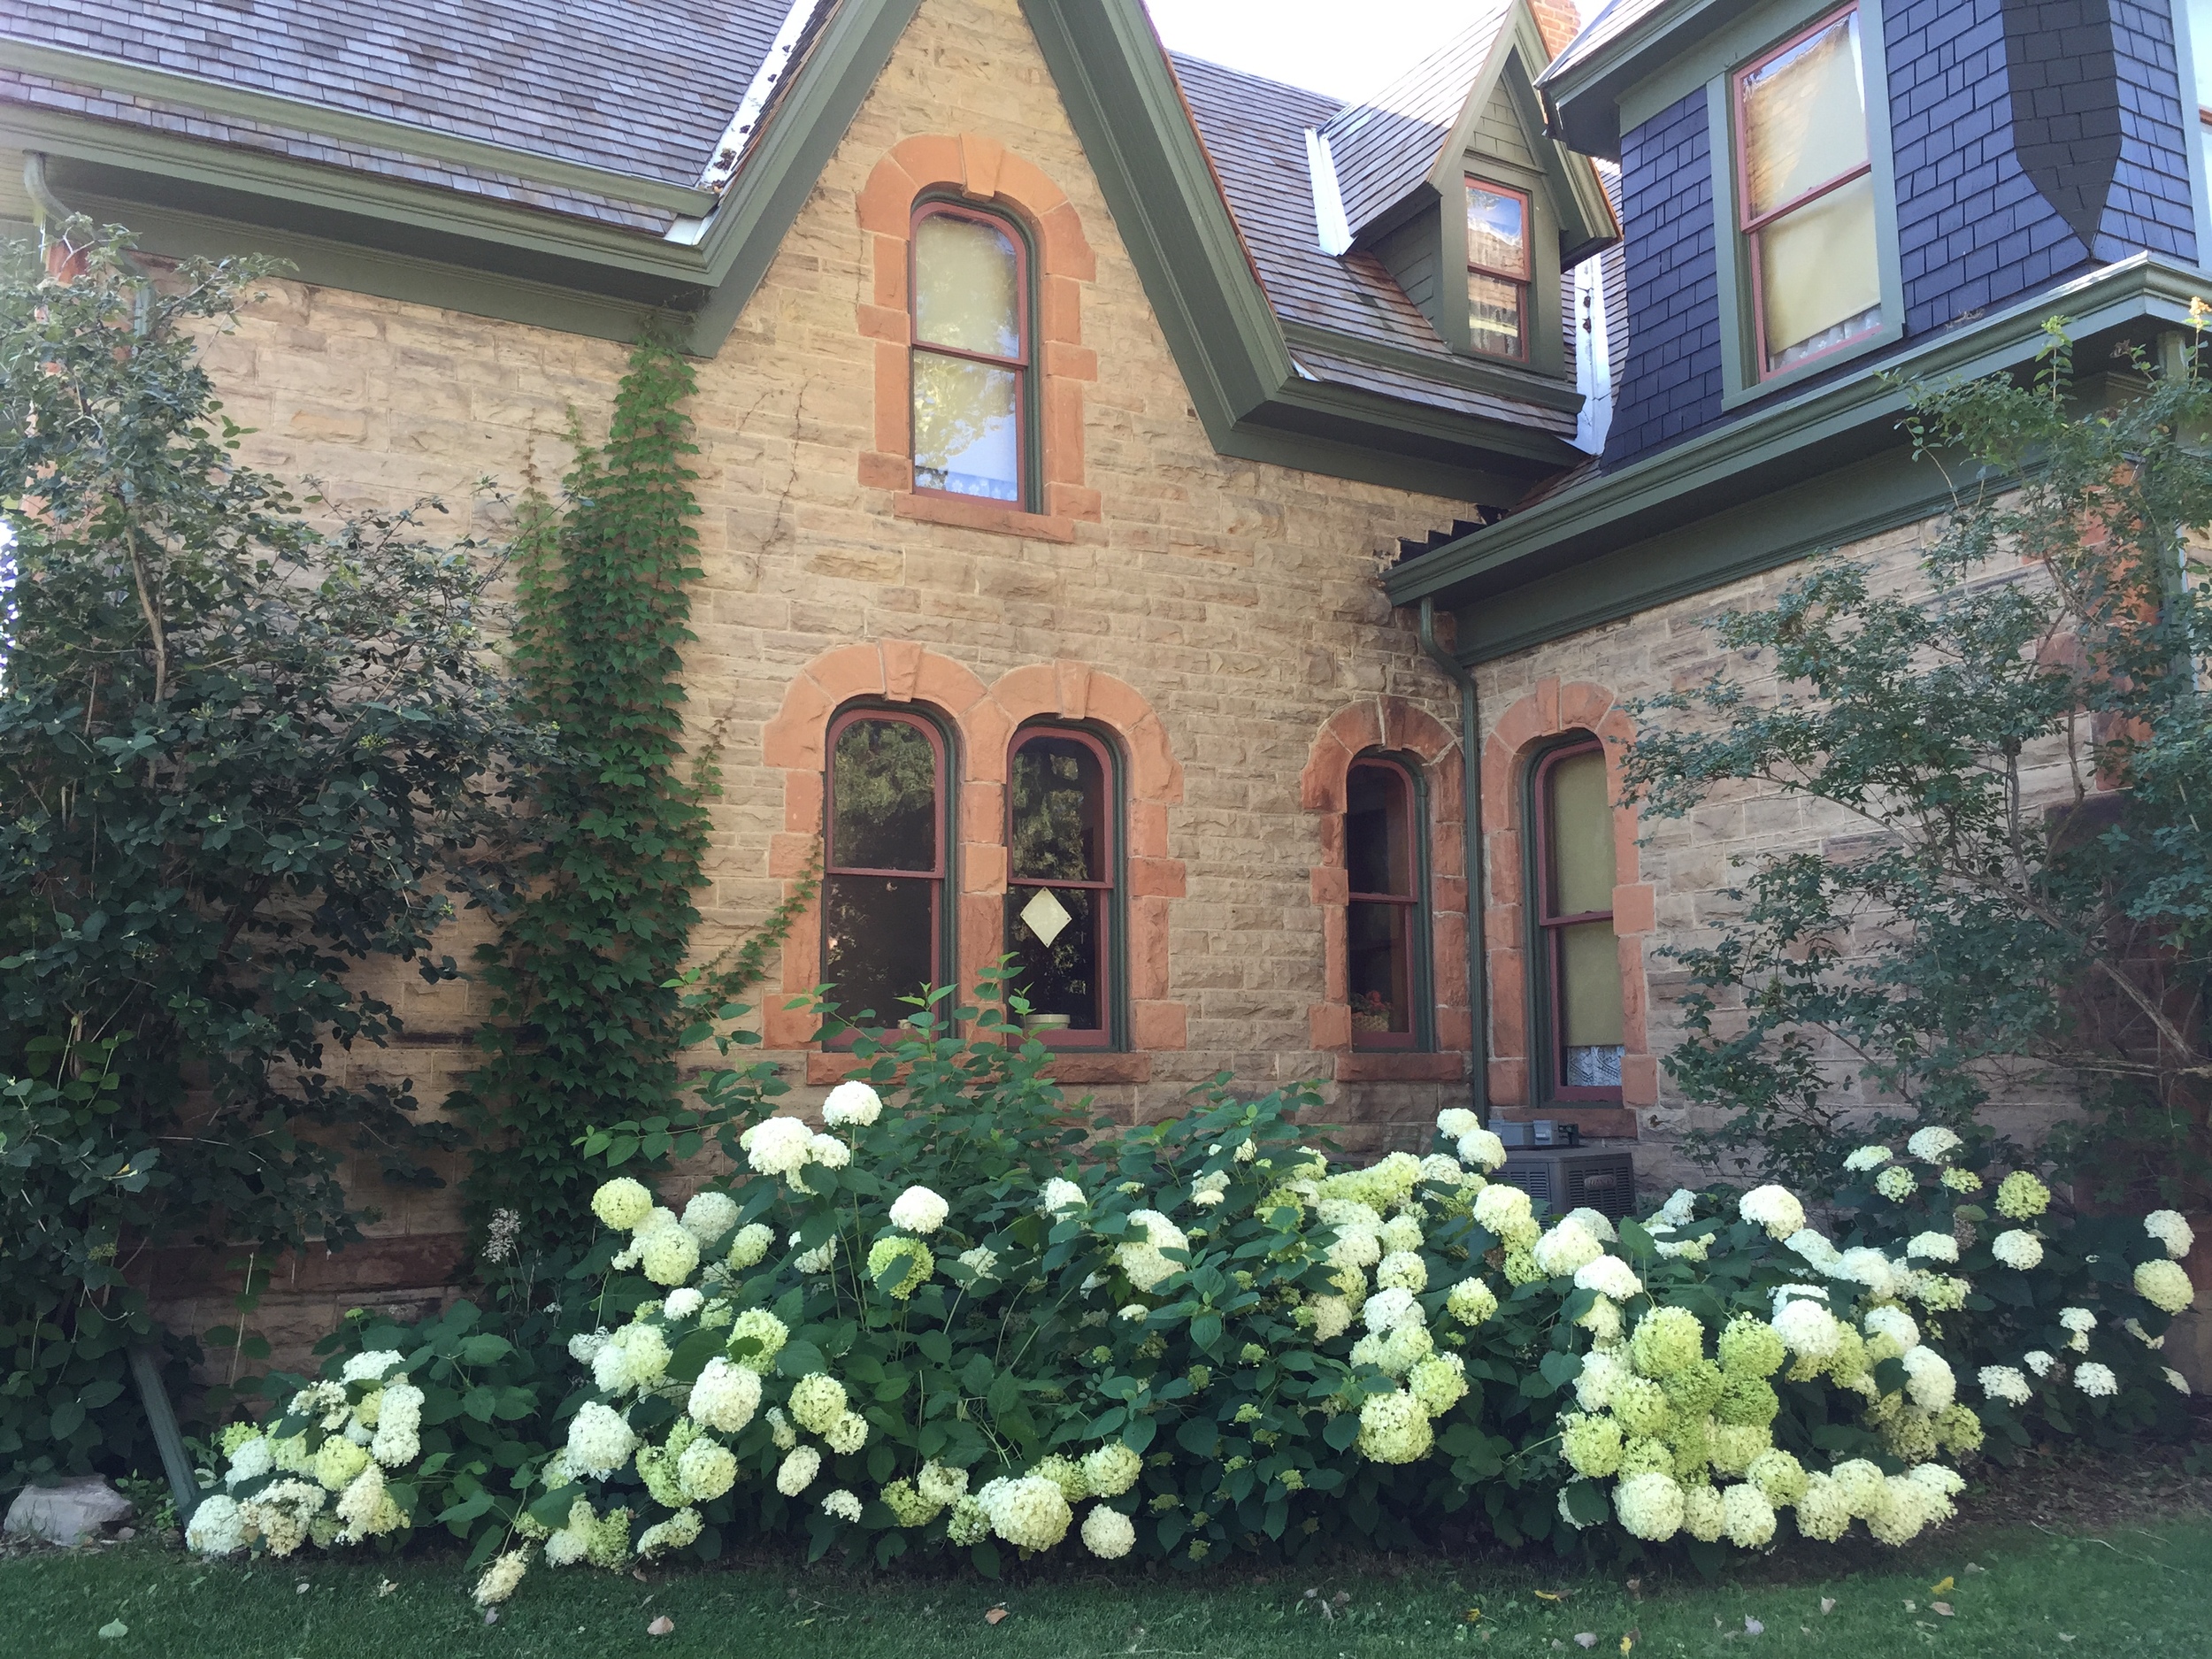 1-Avery-House-Summer-2015-snowball-bushes.JPG